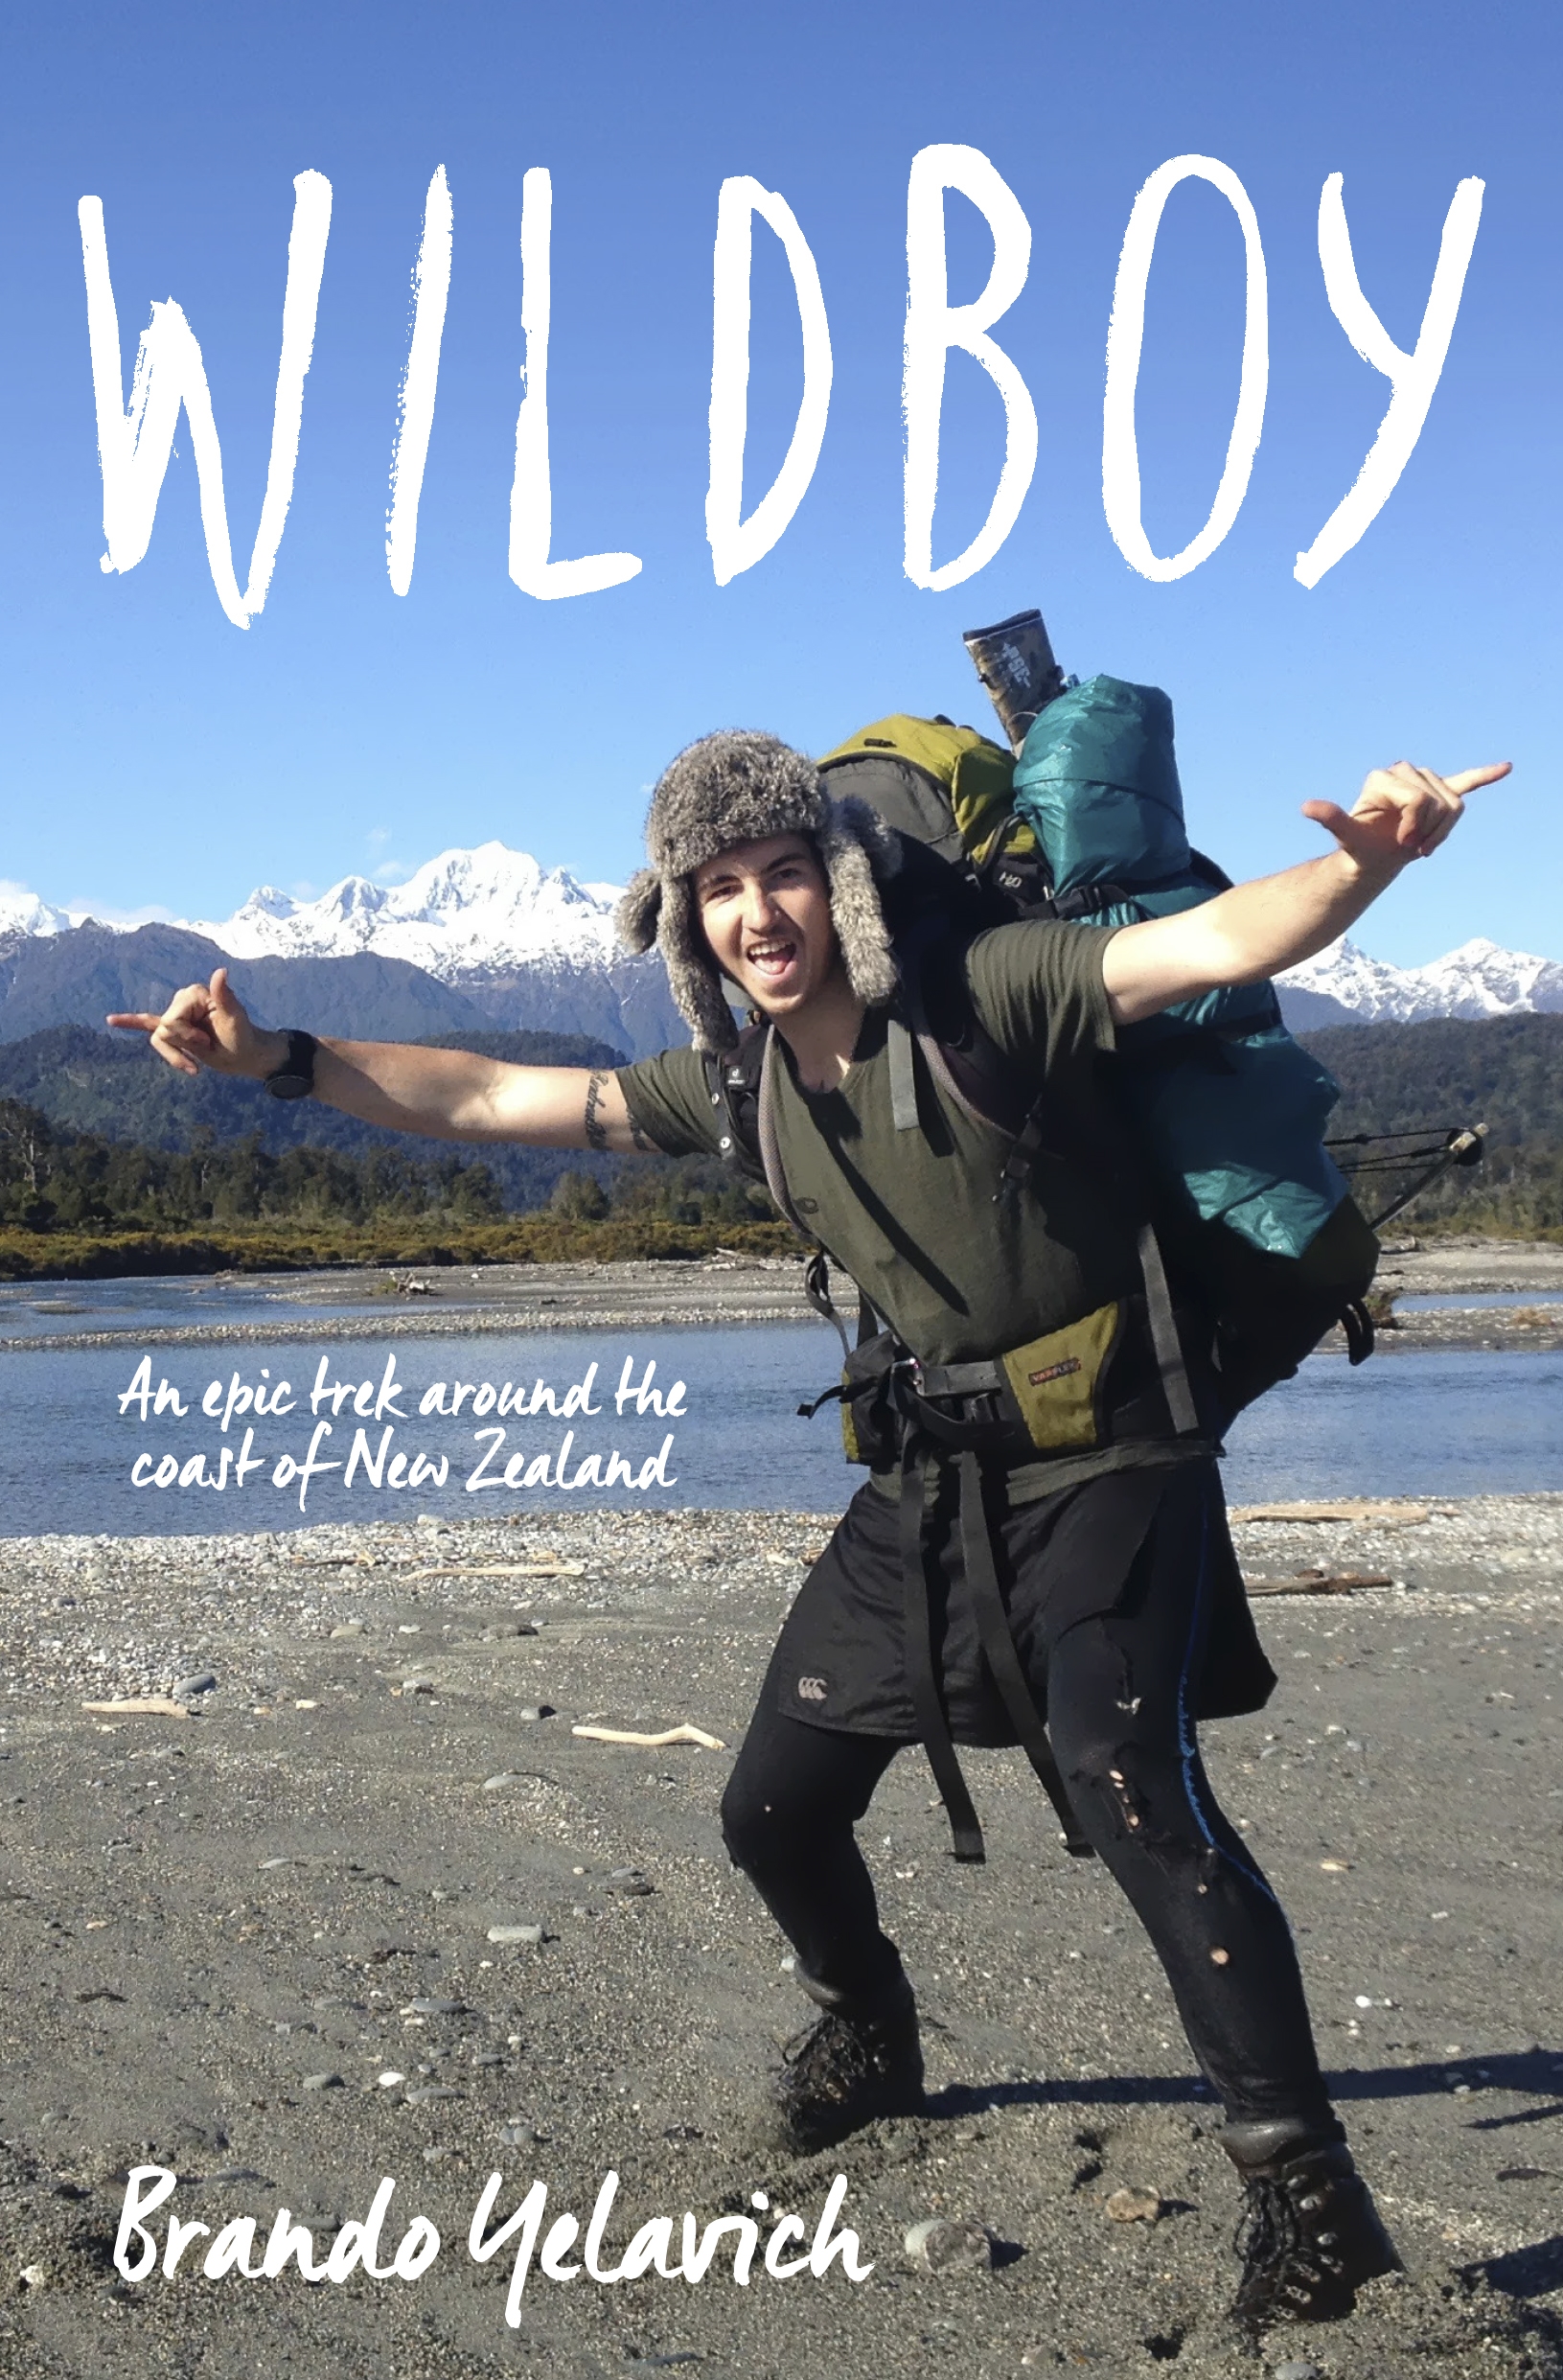 Wildboy by Brando Yelavich - Penguin Books New Zealand